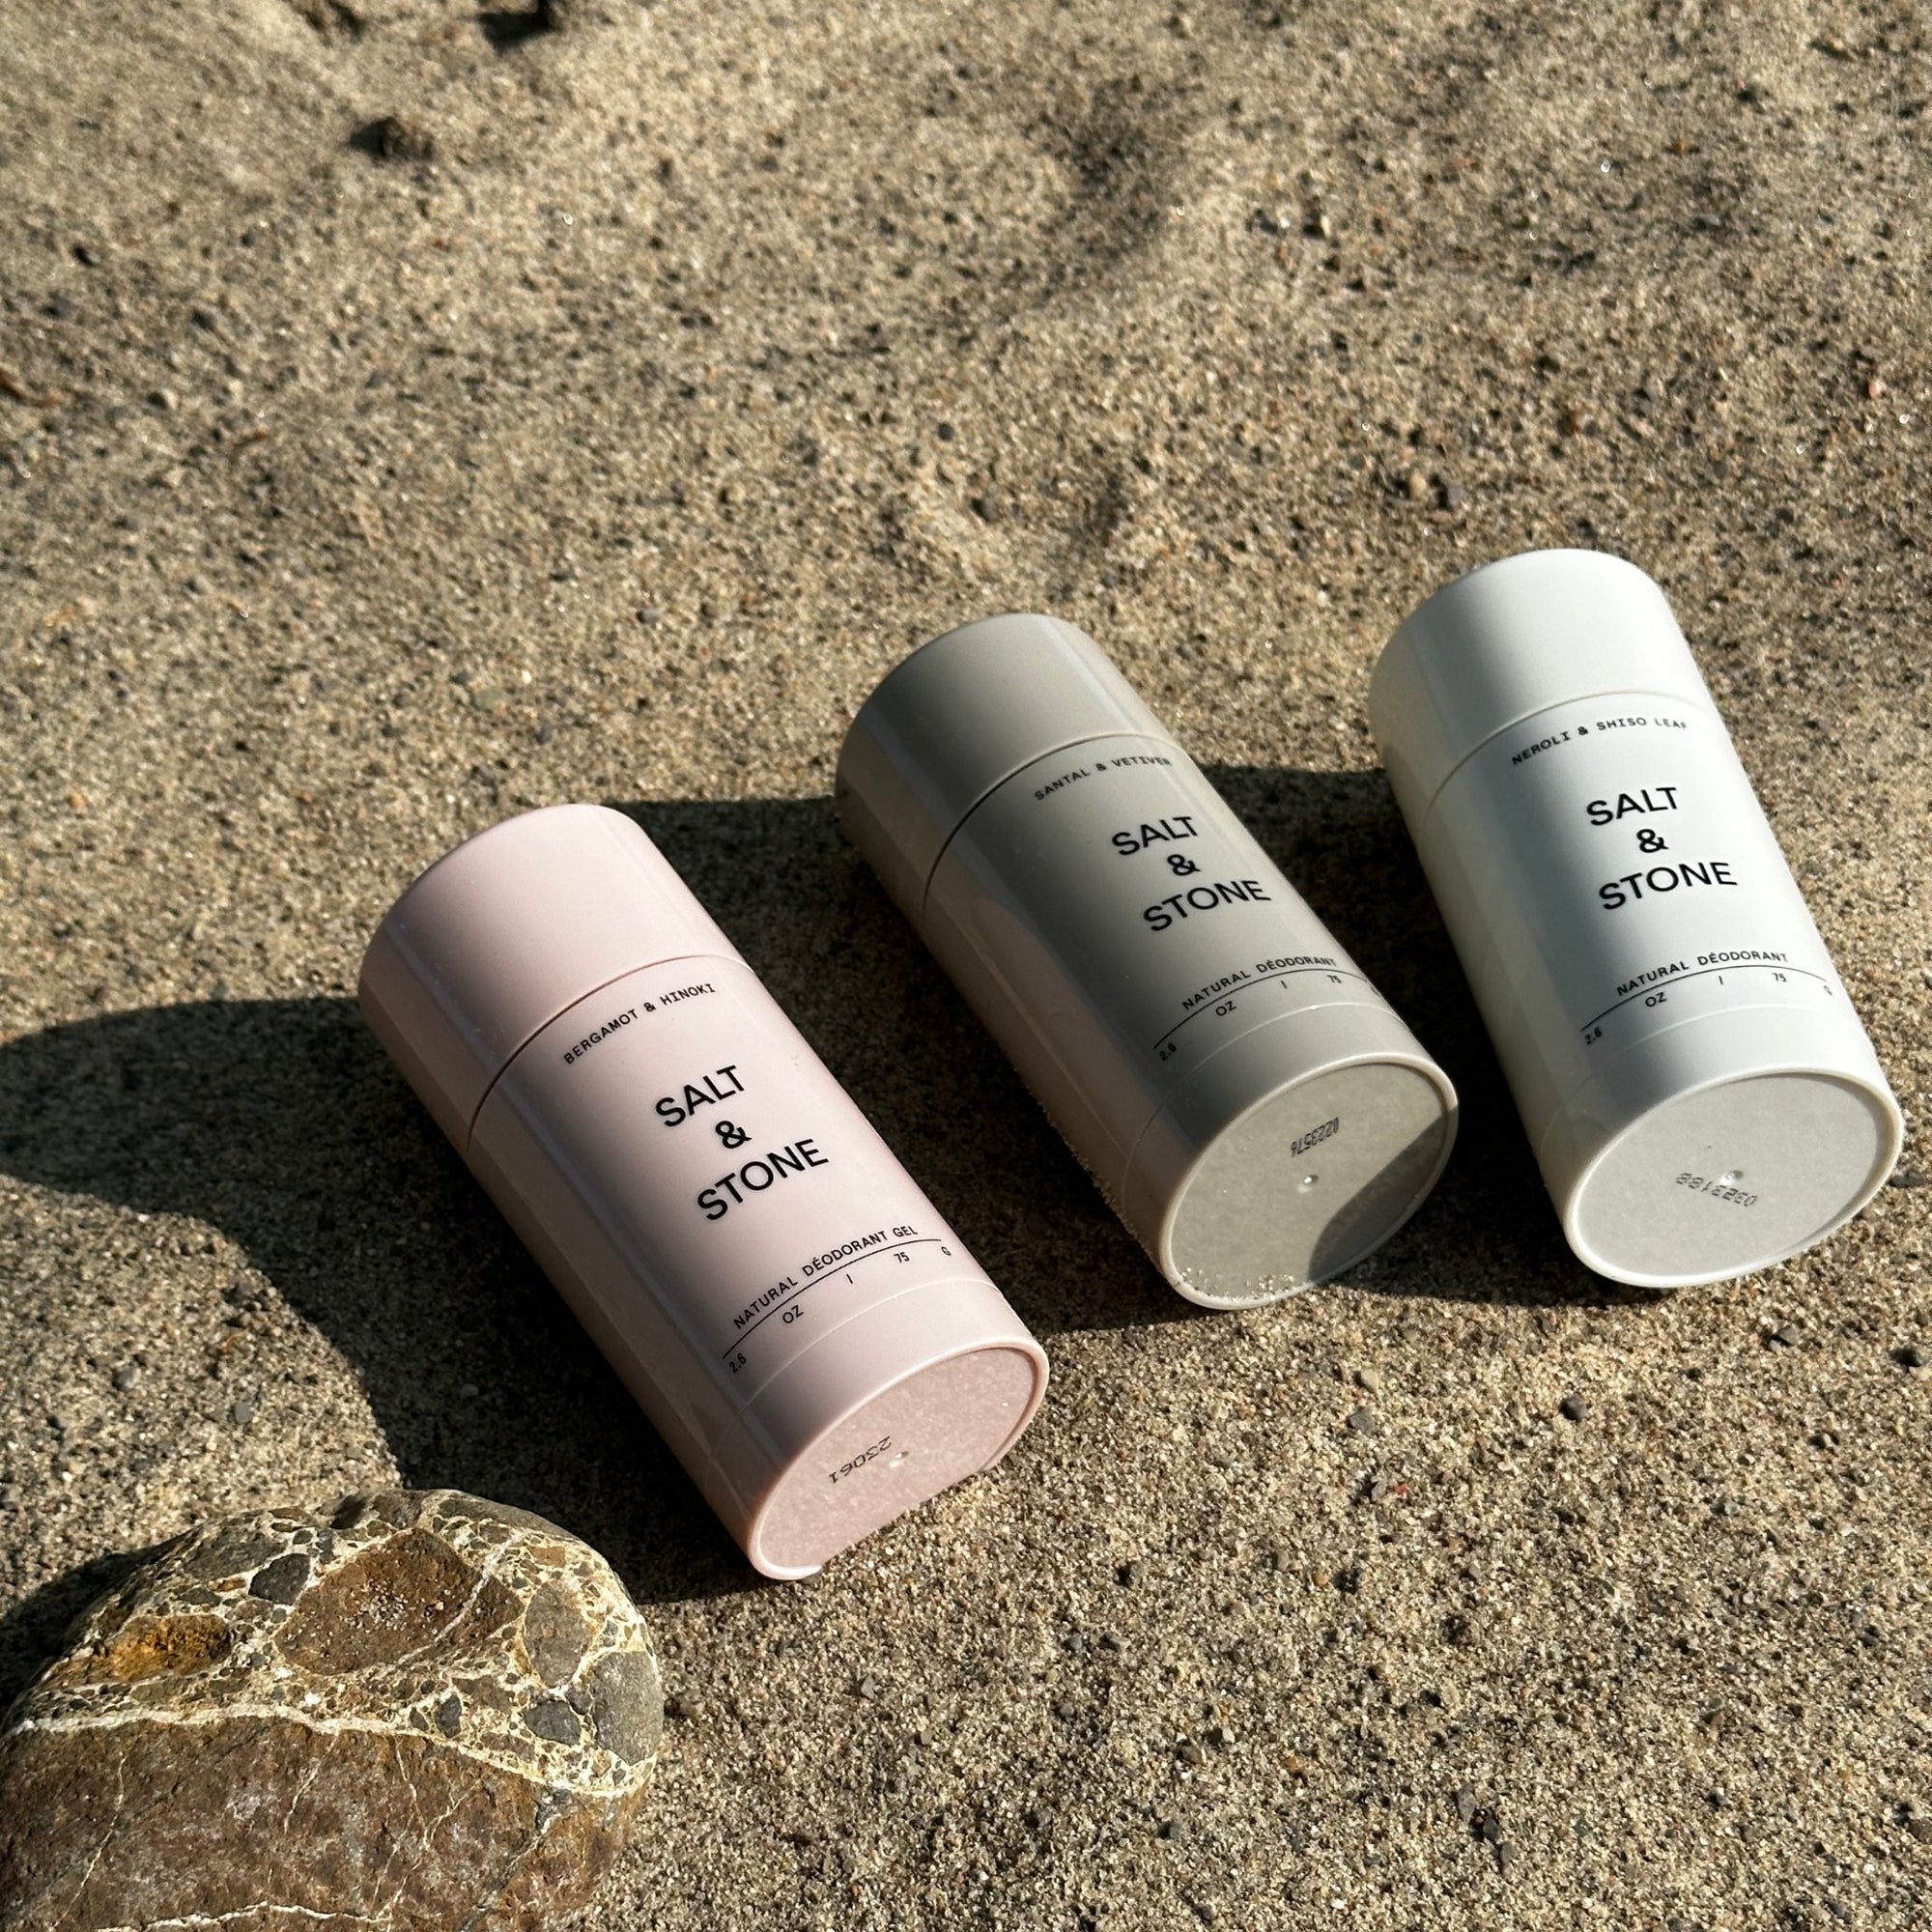 Salt & Stone - Salt & Stone Natural Deodorant - ORESTA clean beauty simplified